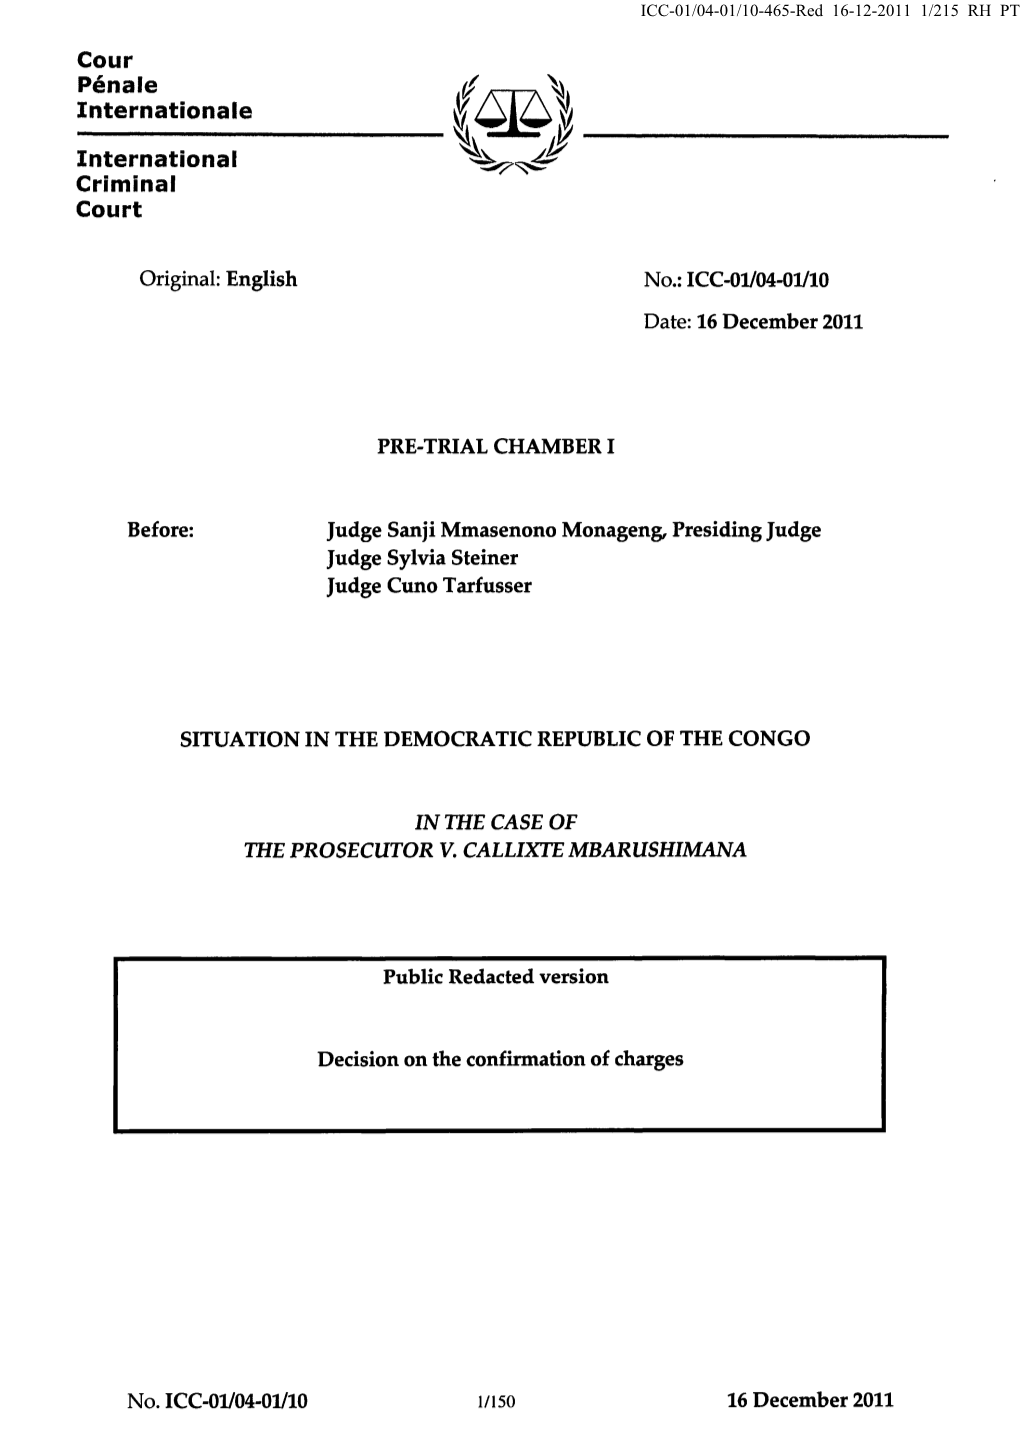 The Prosecutor V, Callixte Mbarushimana;